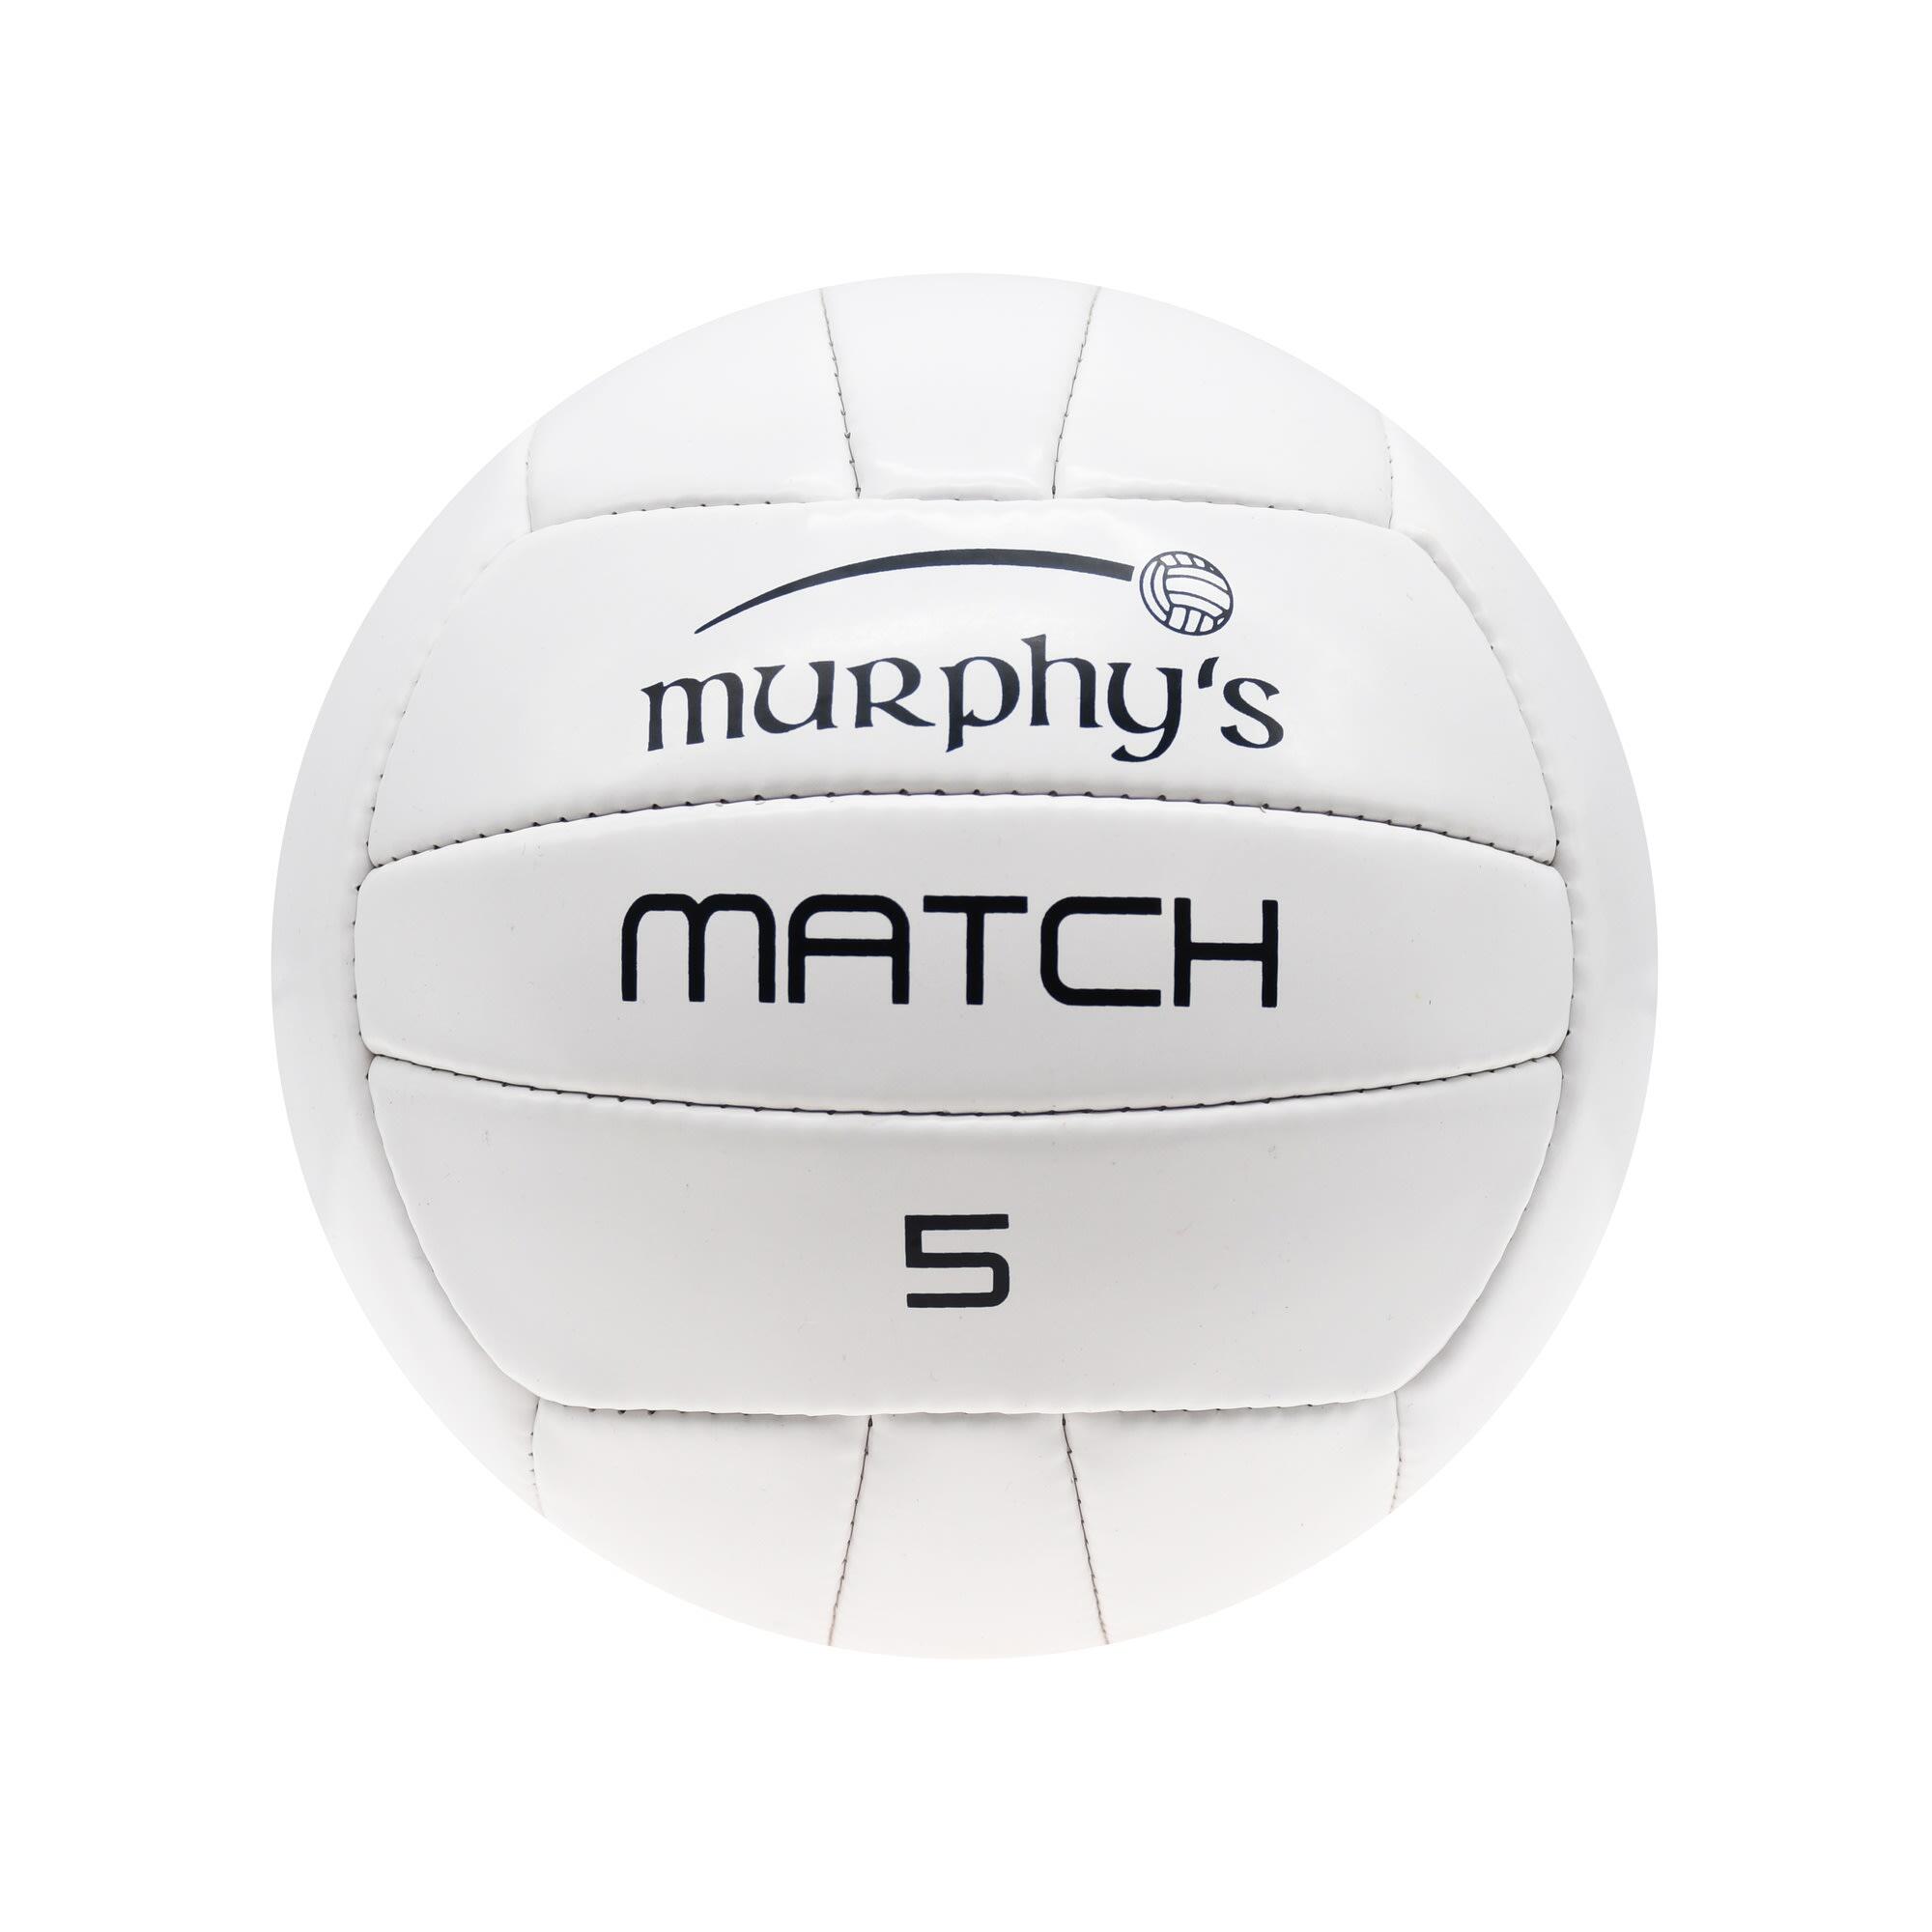 MURPHYS Match Gaelic Football (White)